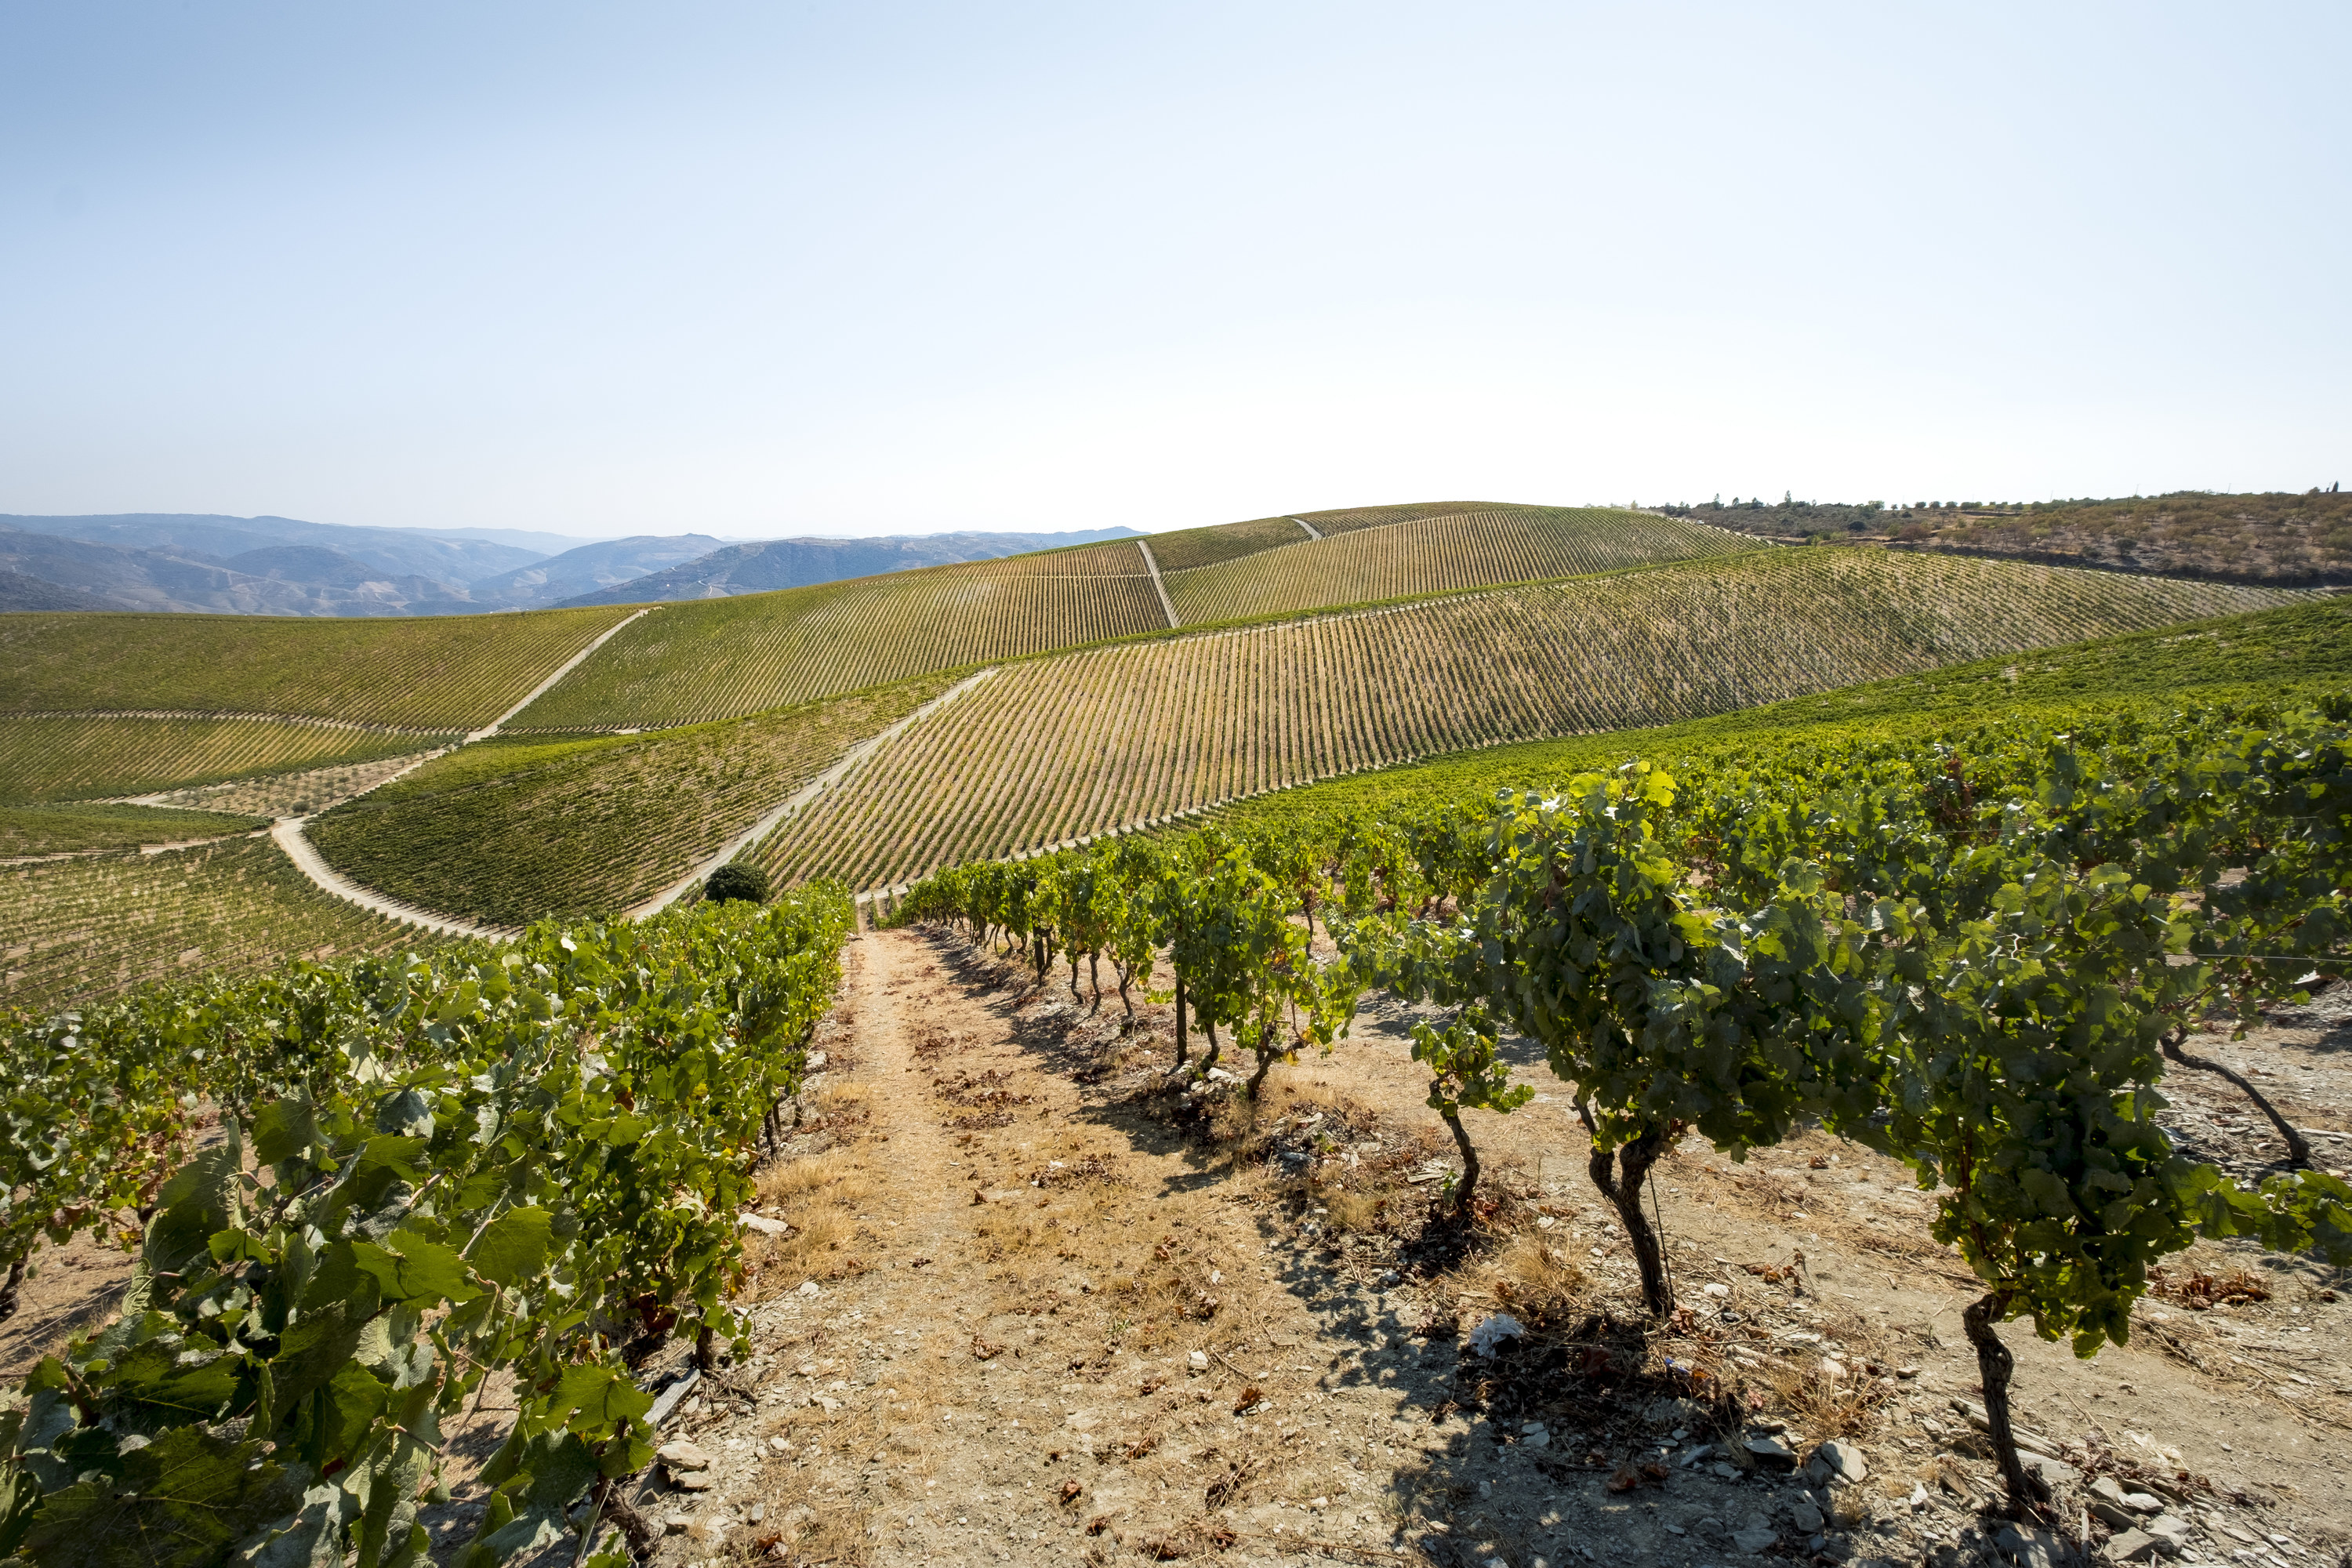 A vineyard